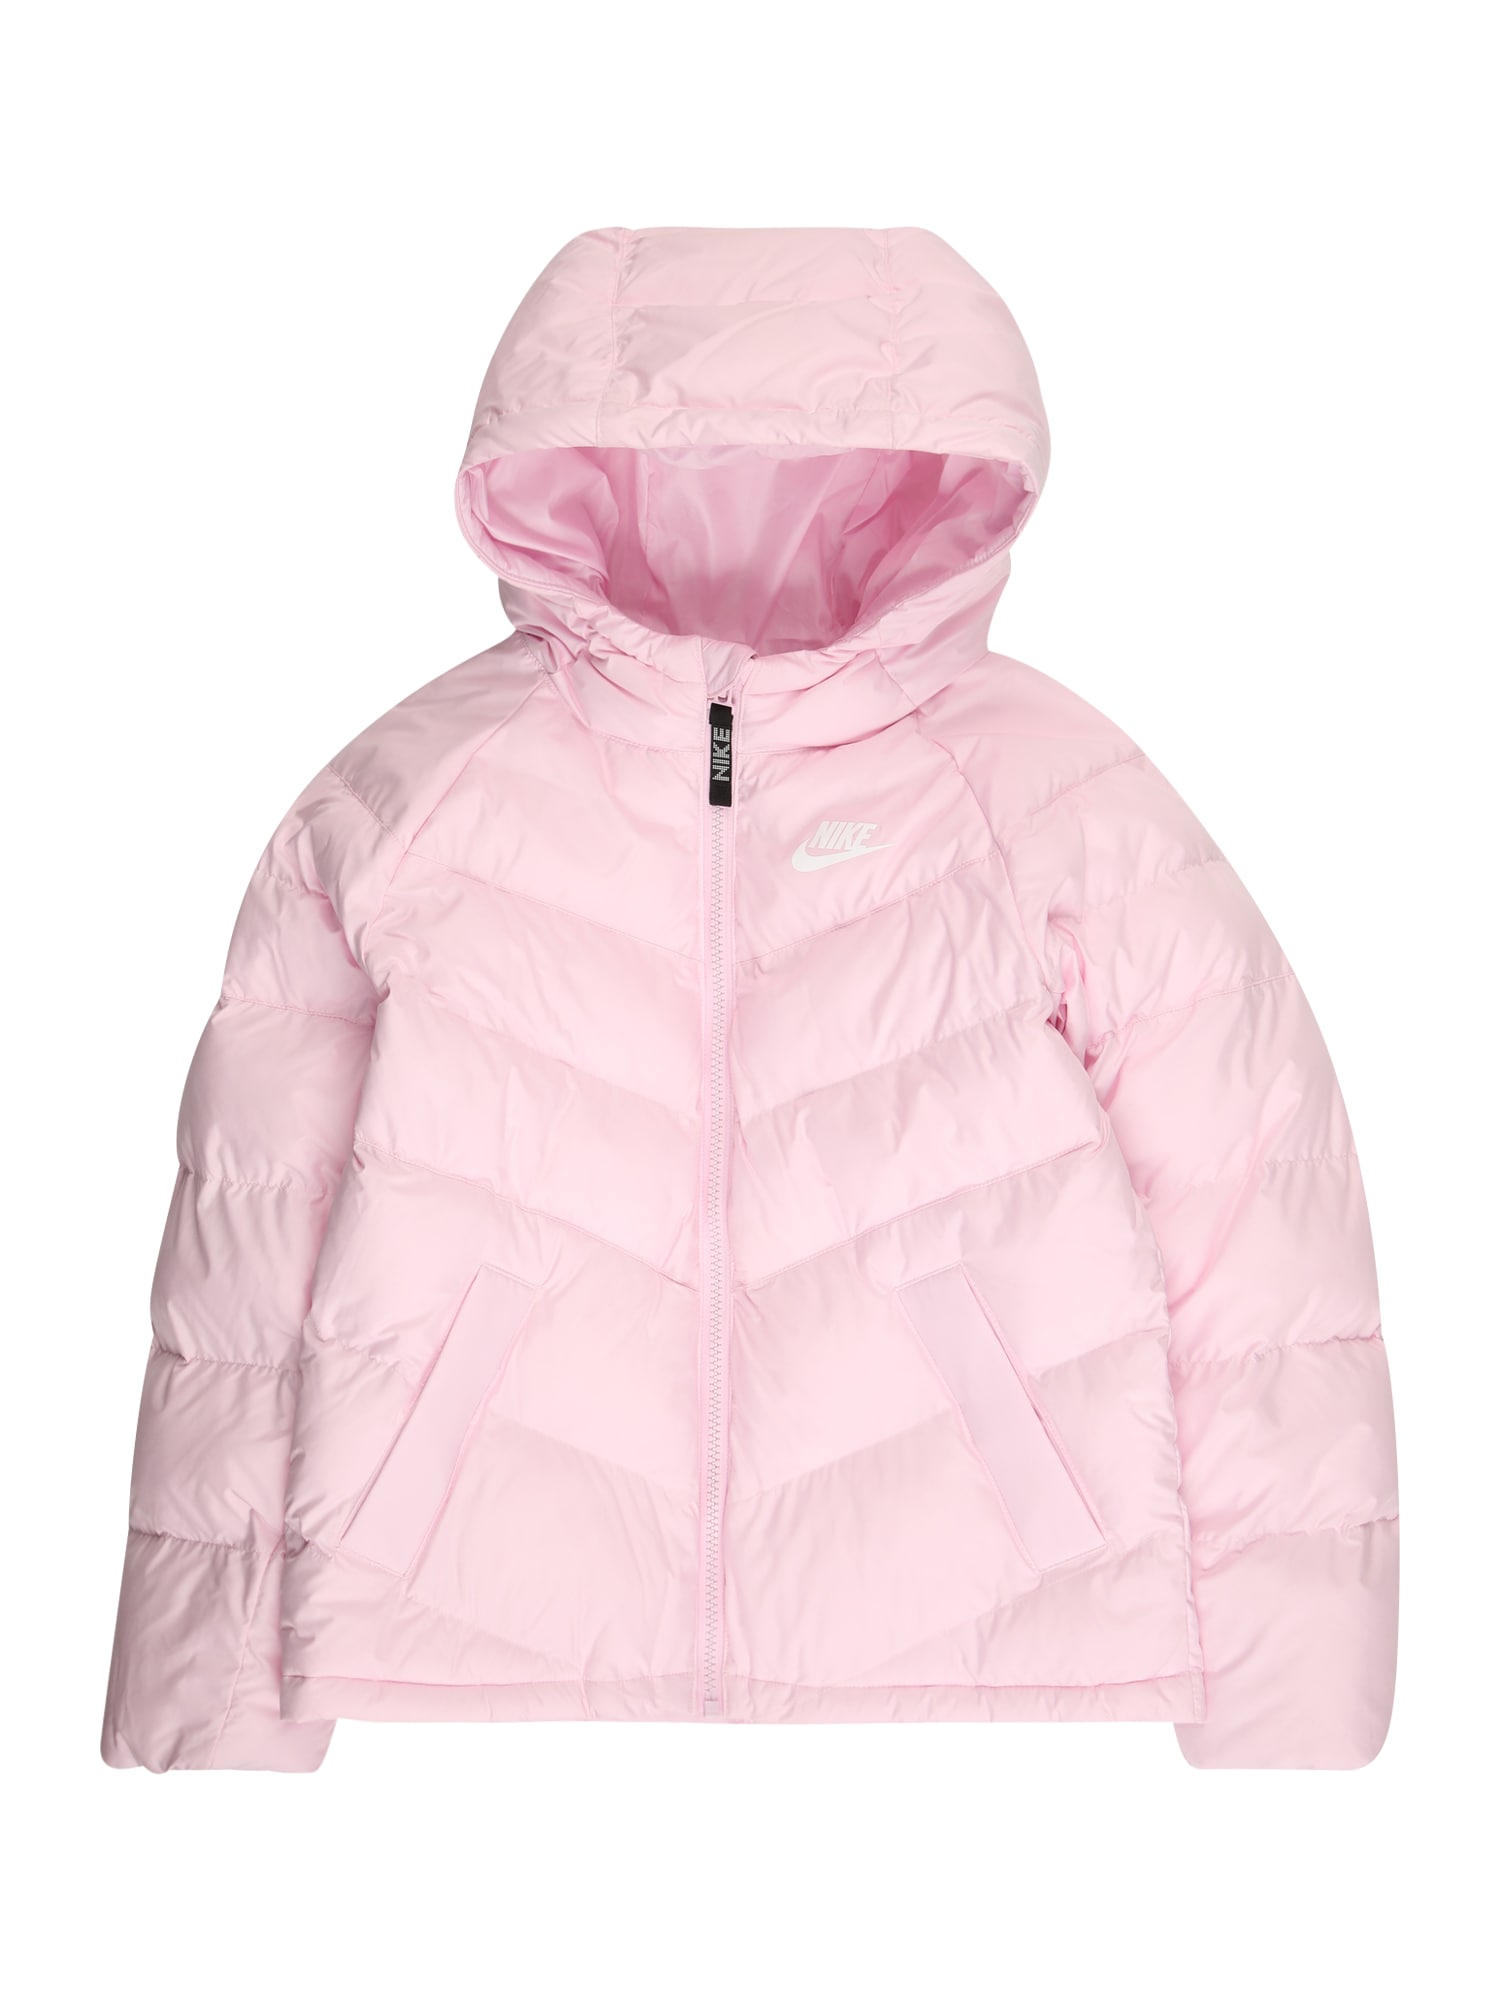 Nike Sportswear Zimska jakna  pastelno roza / bela